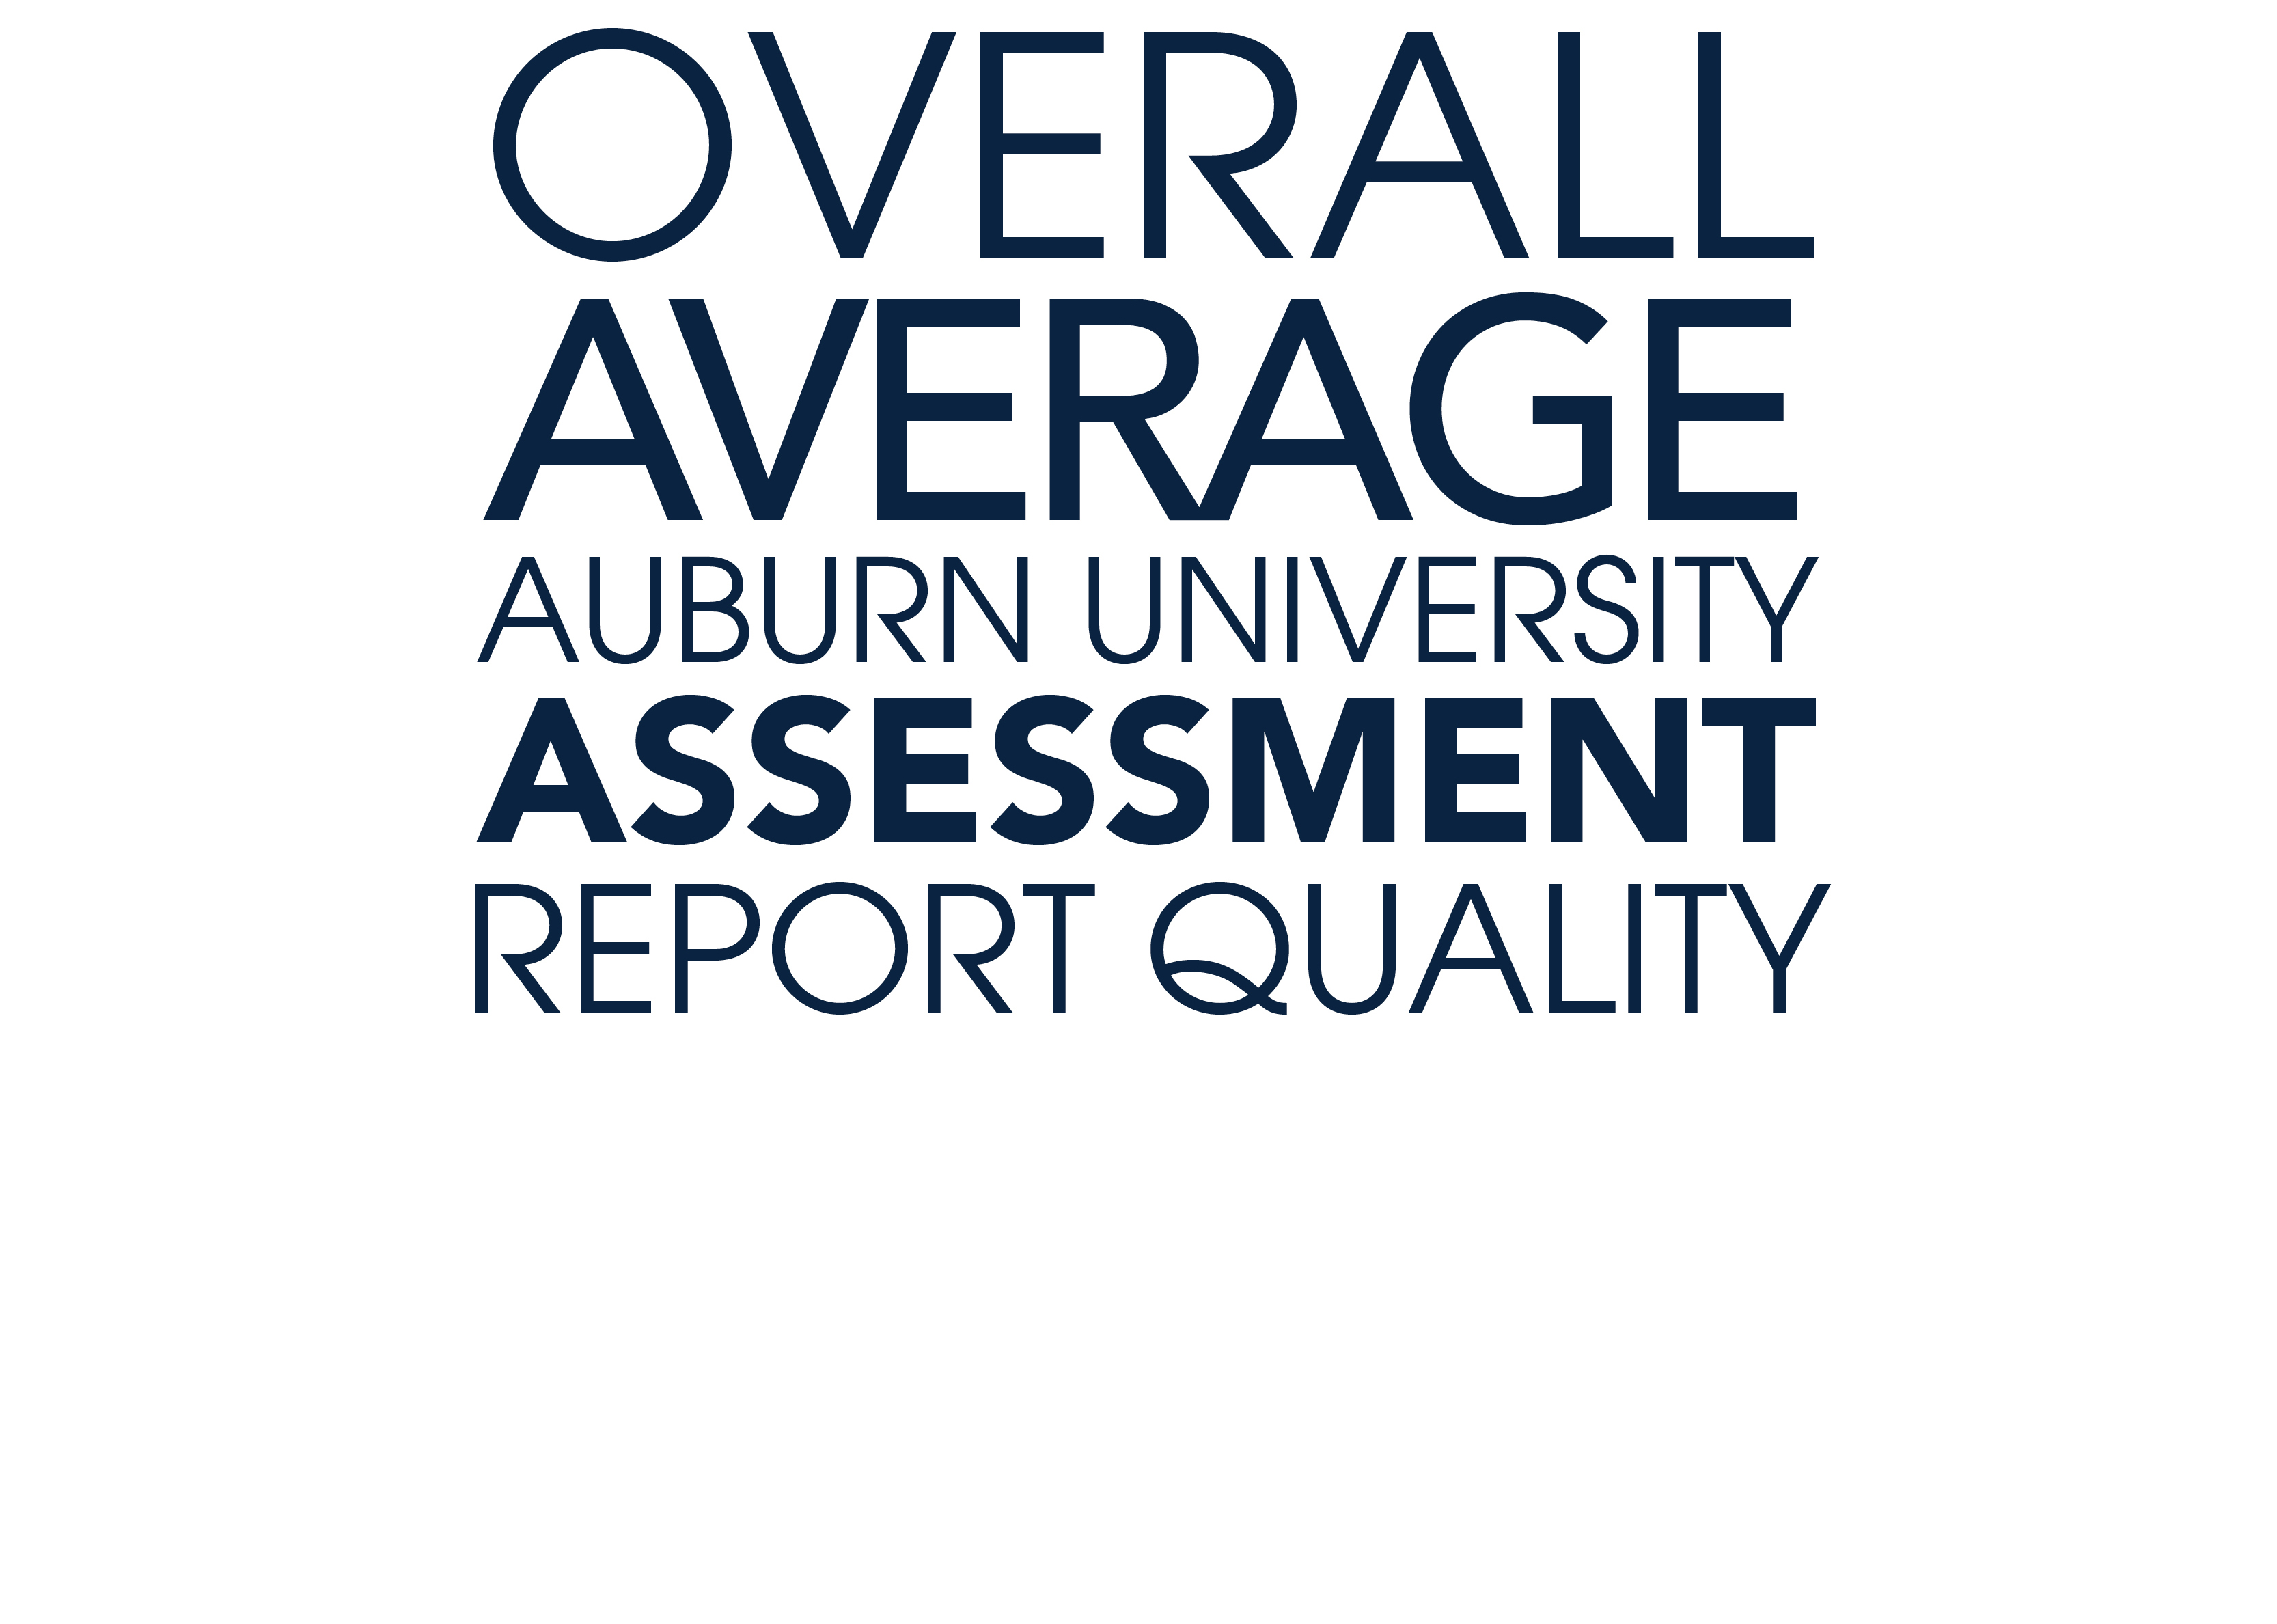 Overall average Auburn University assessment report quality